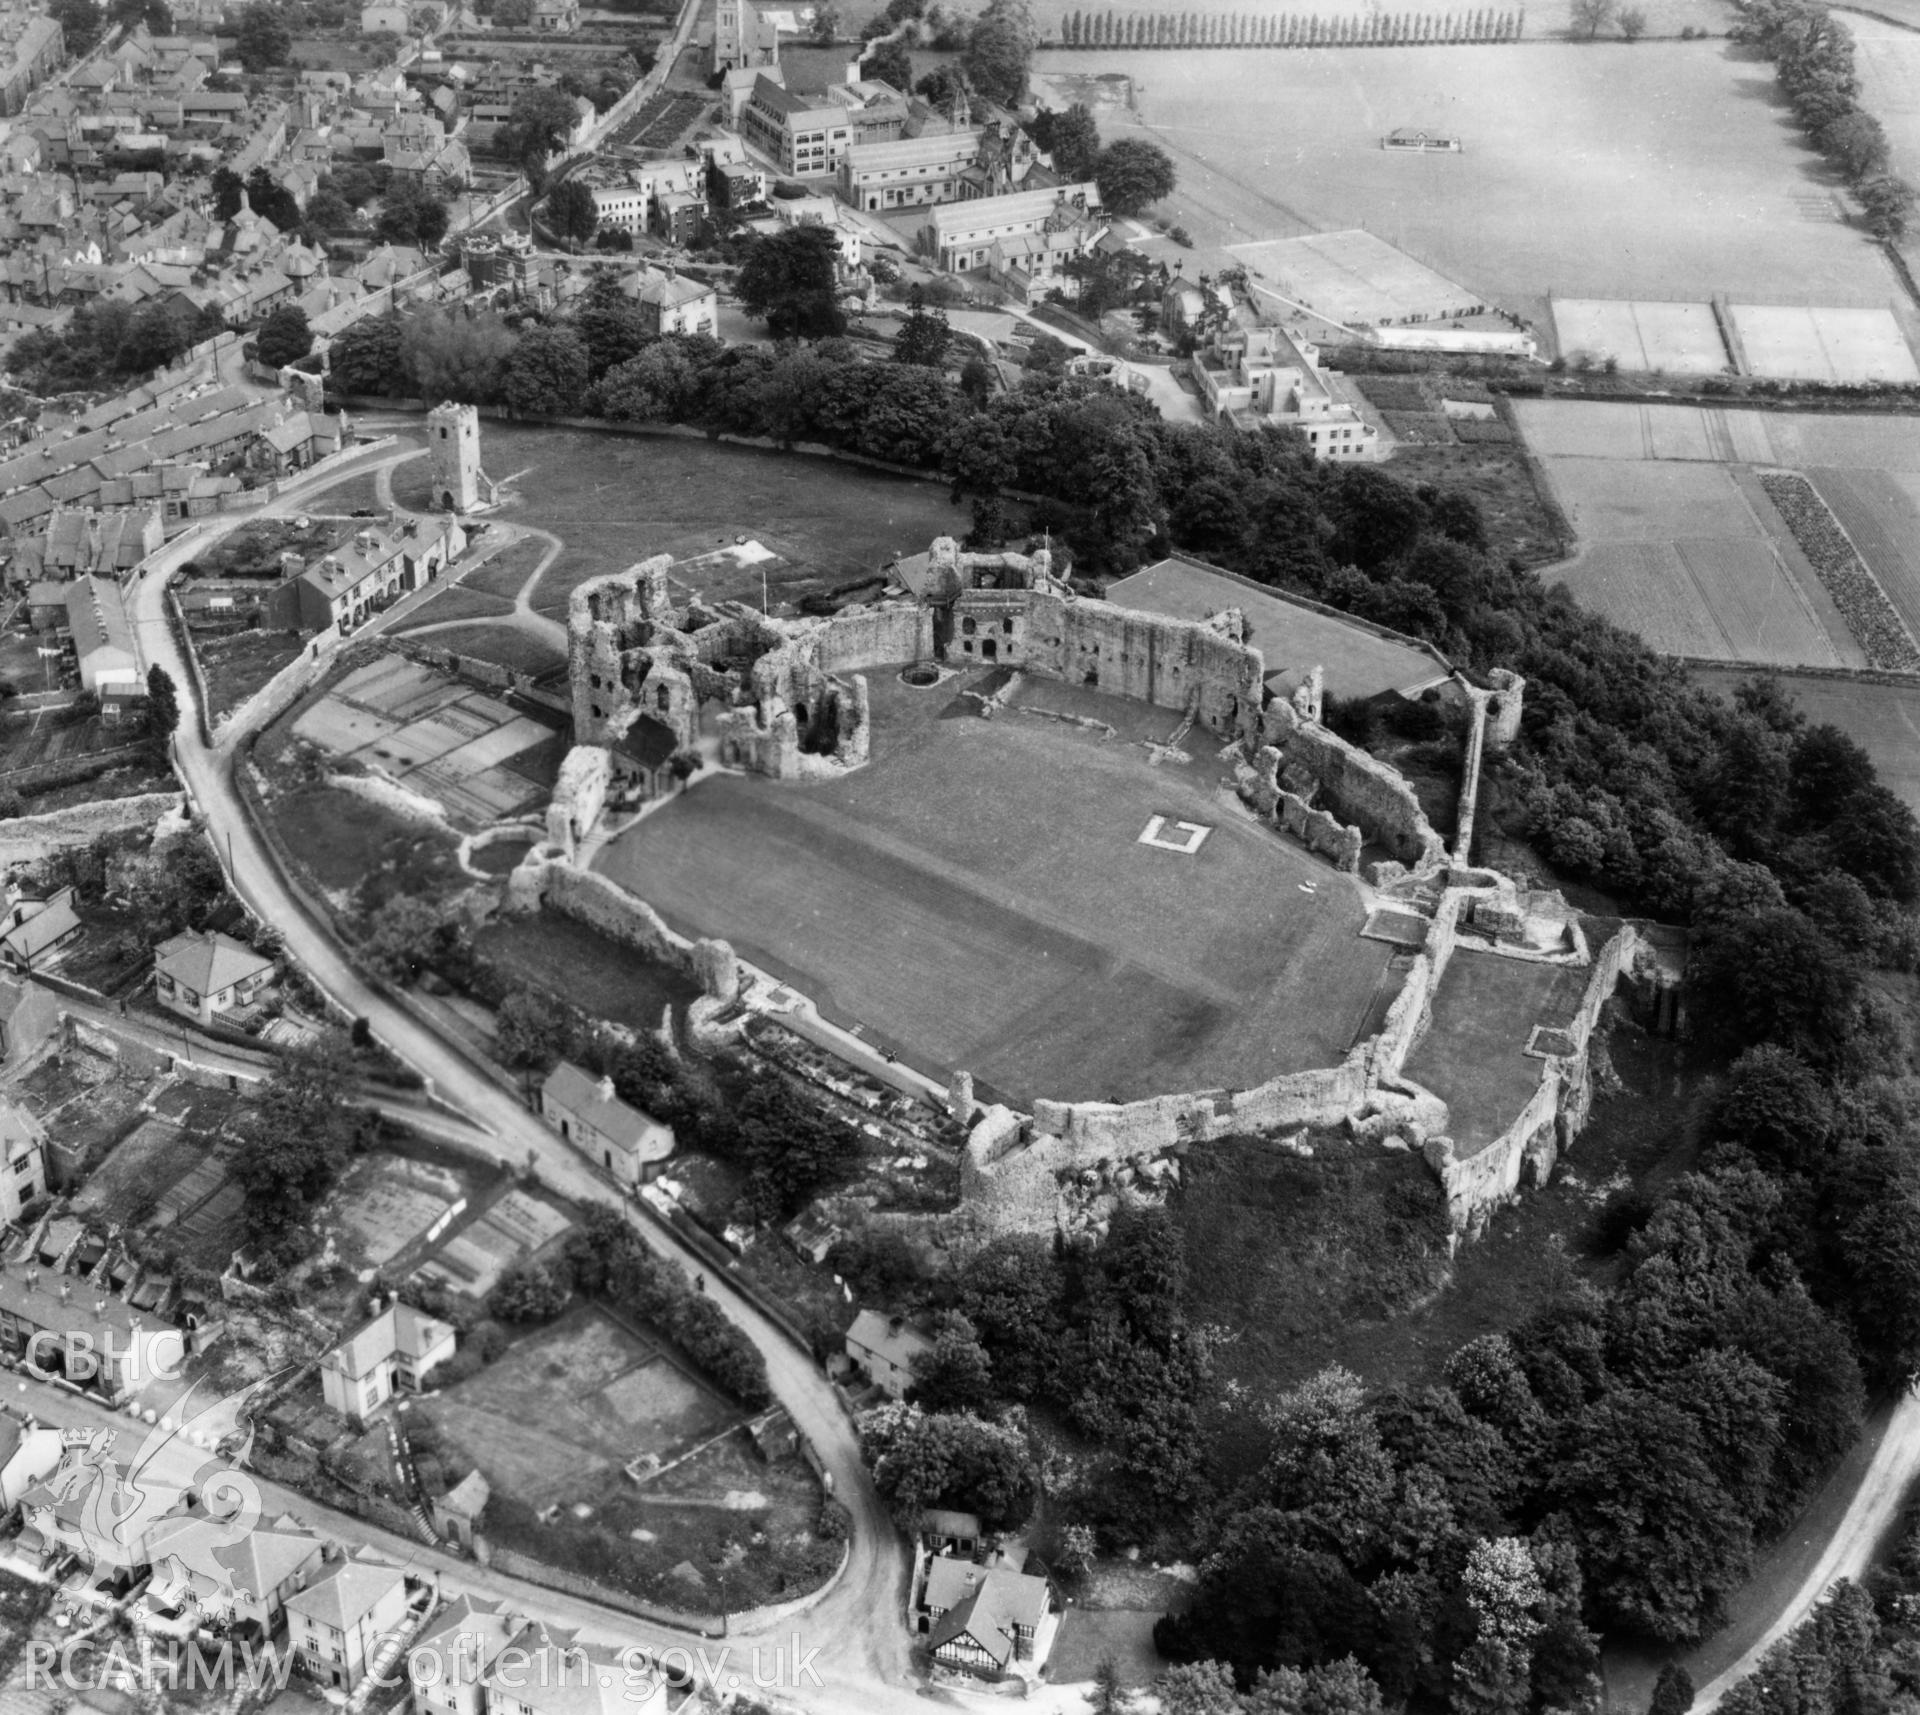 View of Denbigh Upper town showing castle. Oblique aerial photograph, 5?" cut roll film.